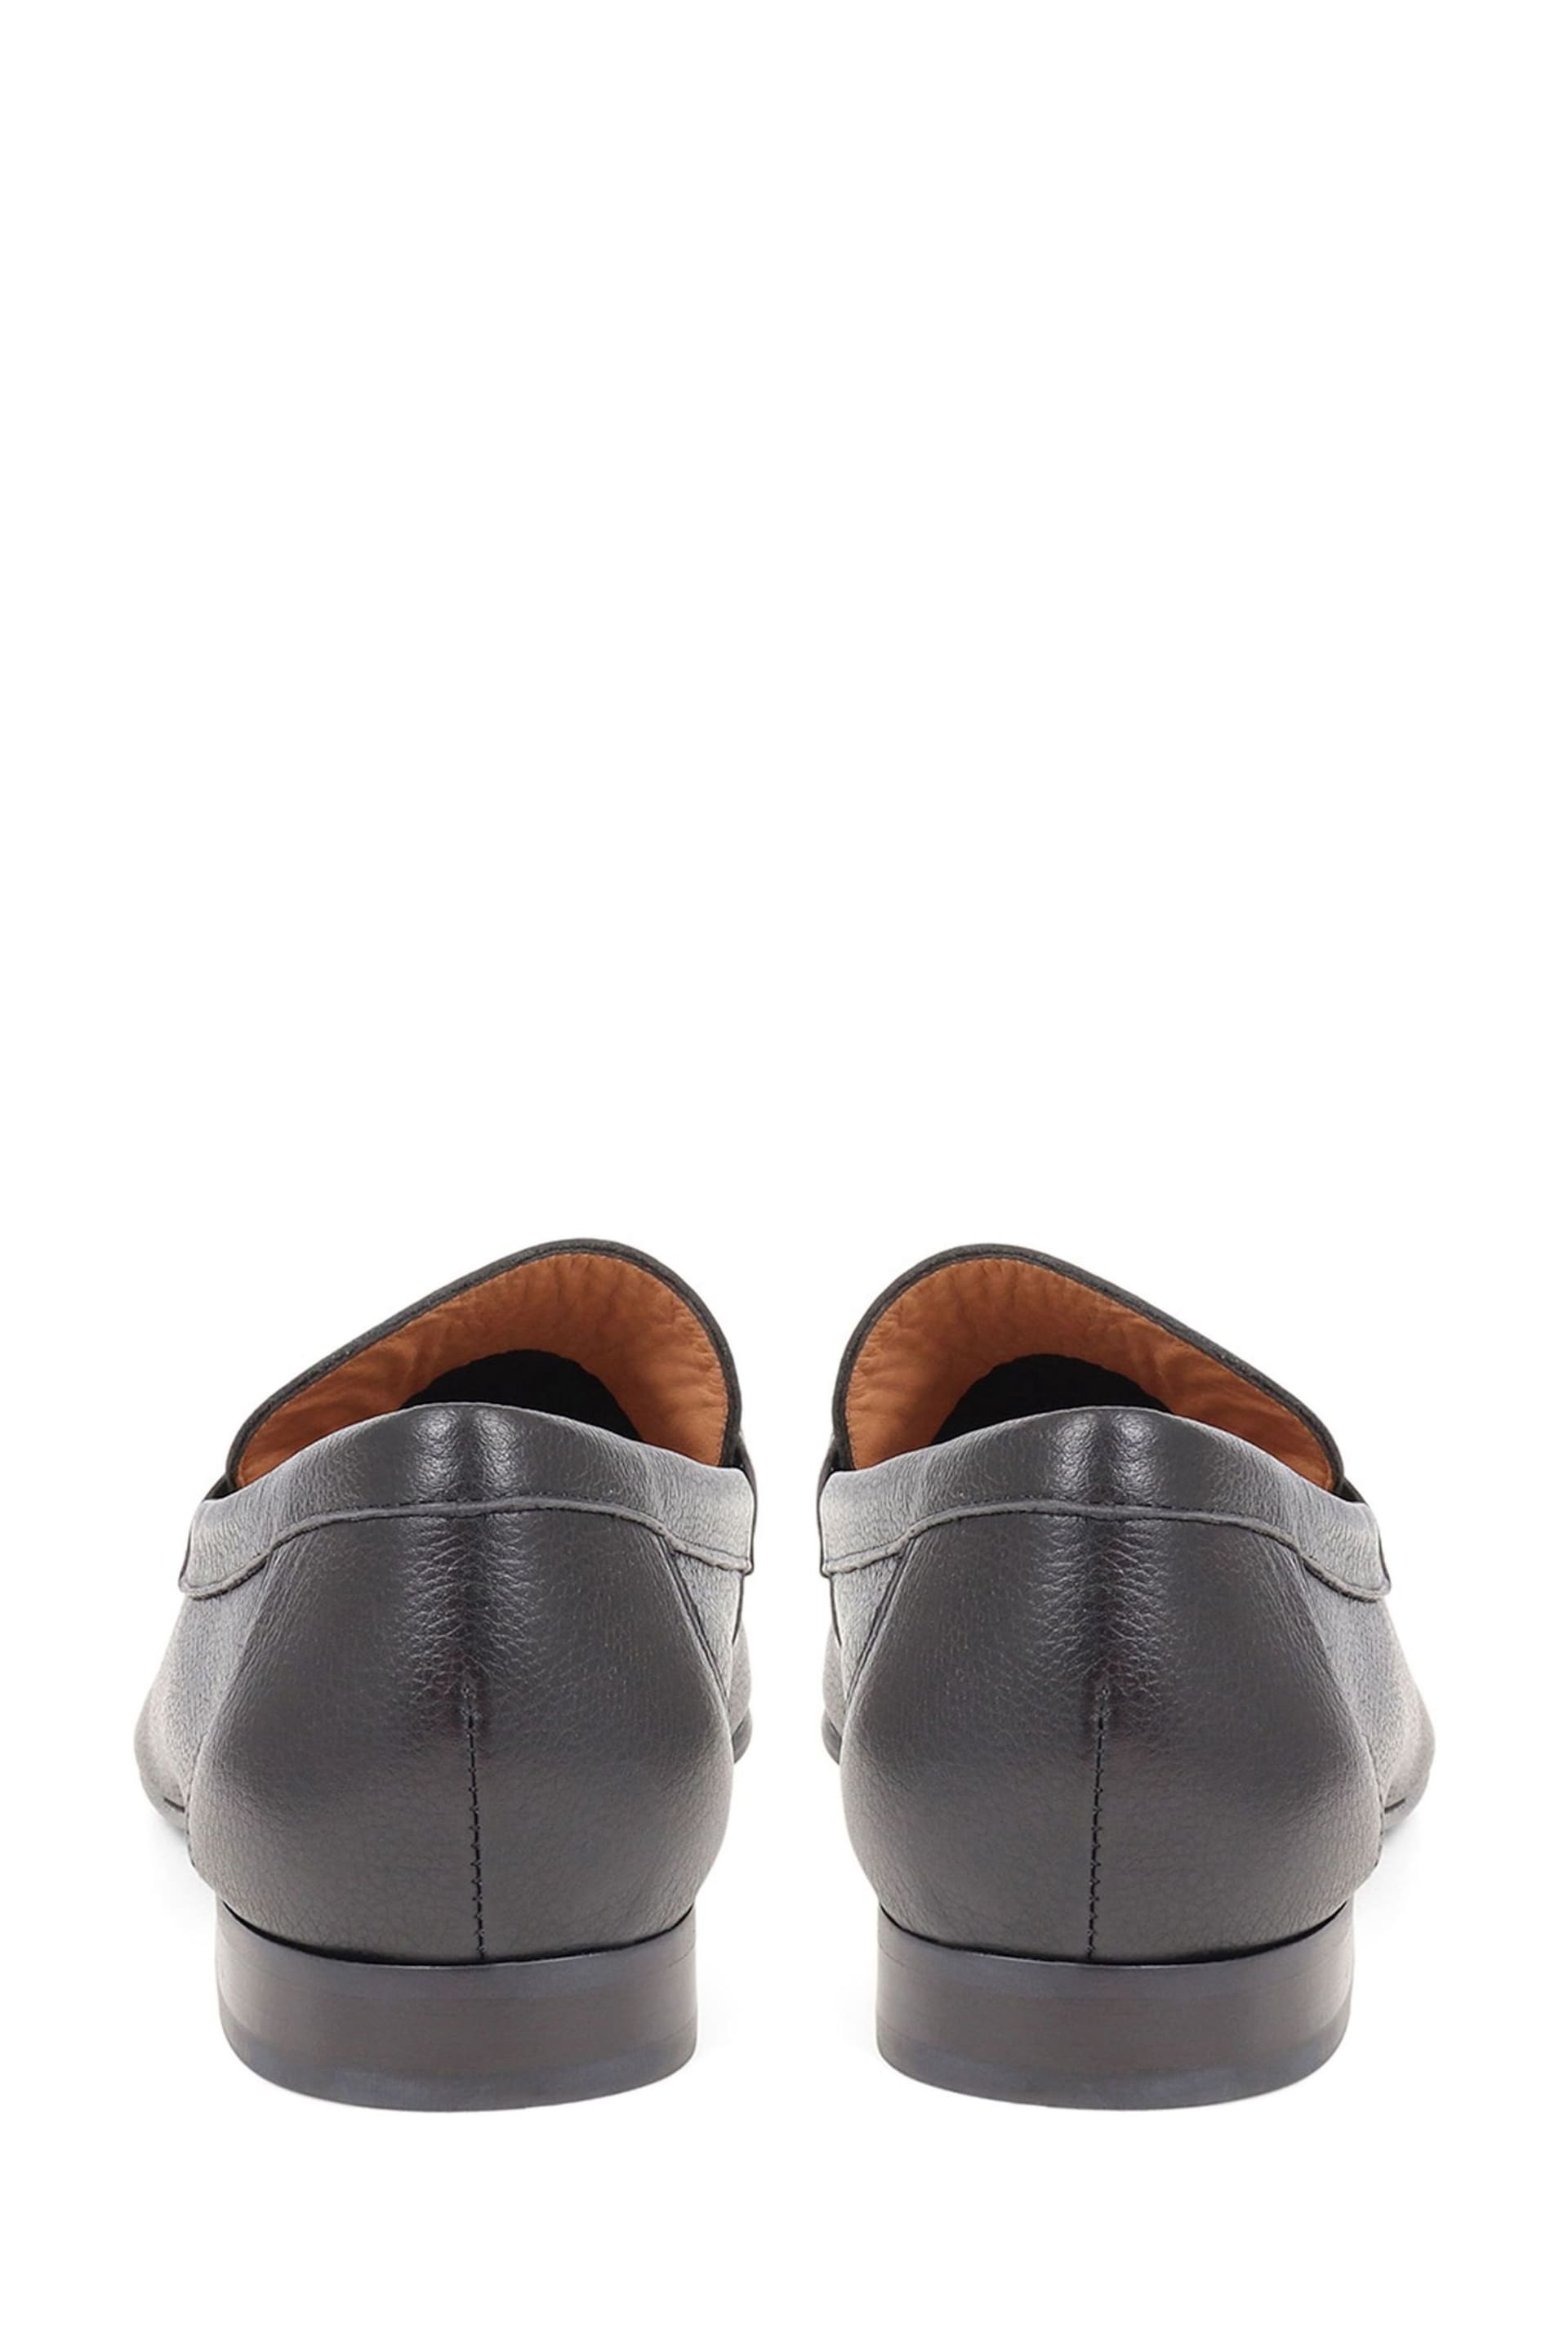 Jones Bootmaker Hana Leather Black Loafers - Image 3 of 5